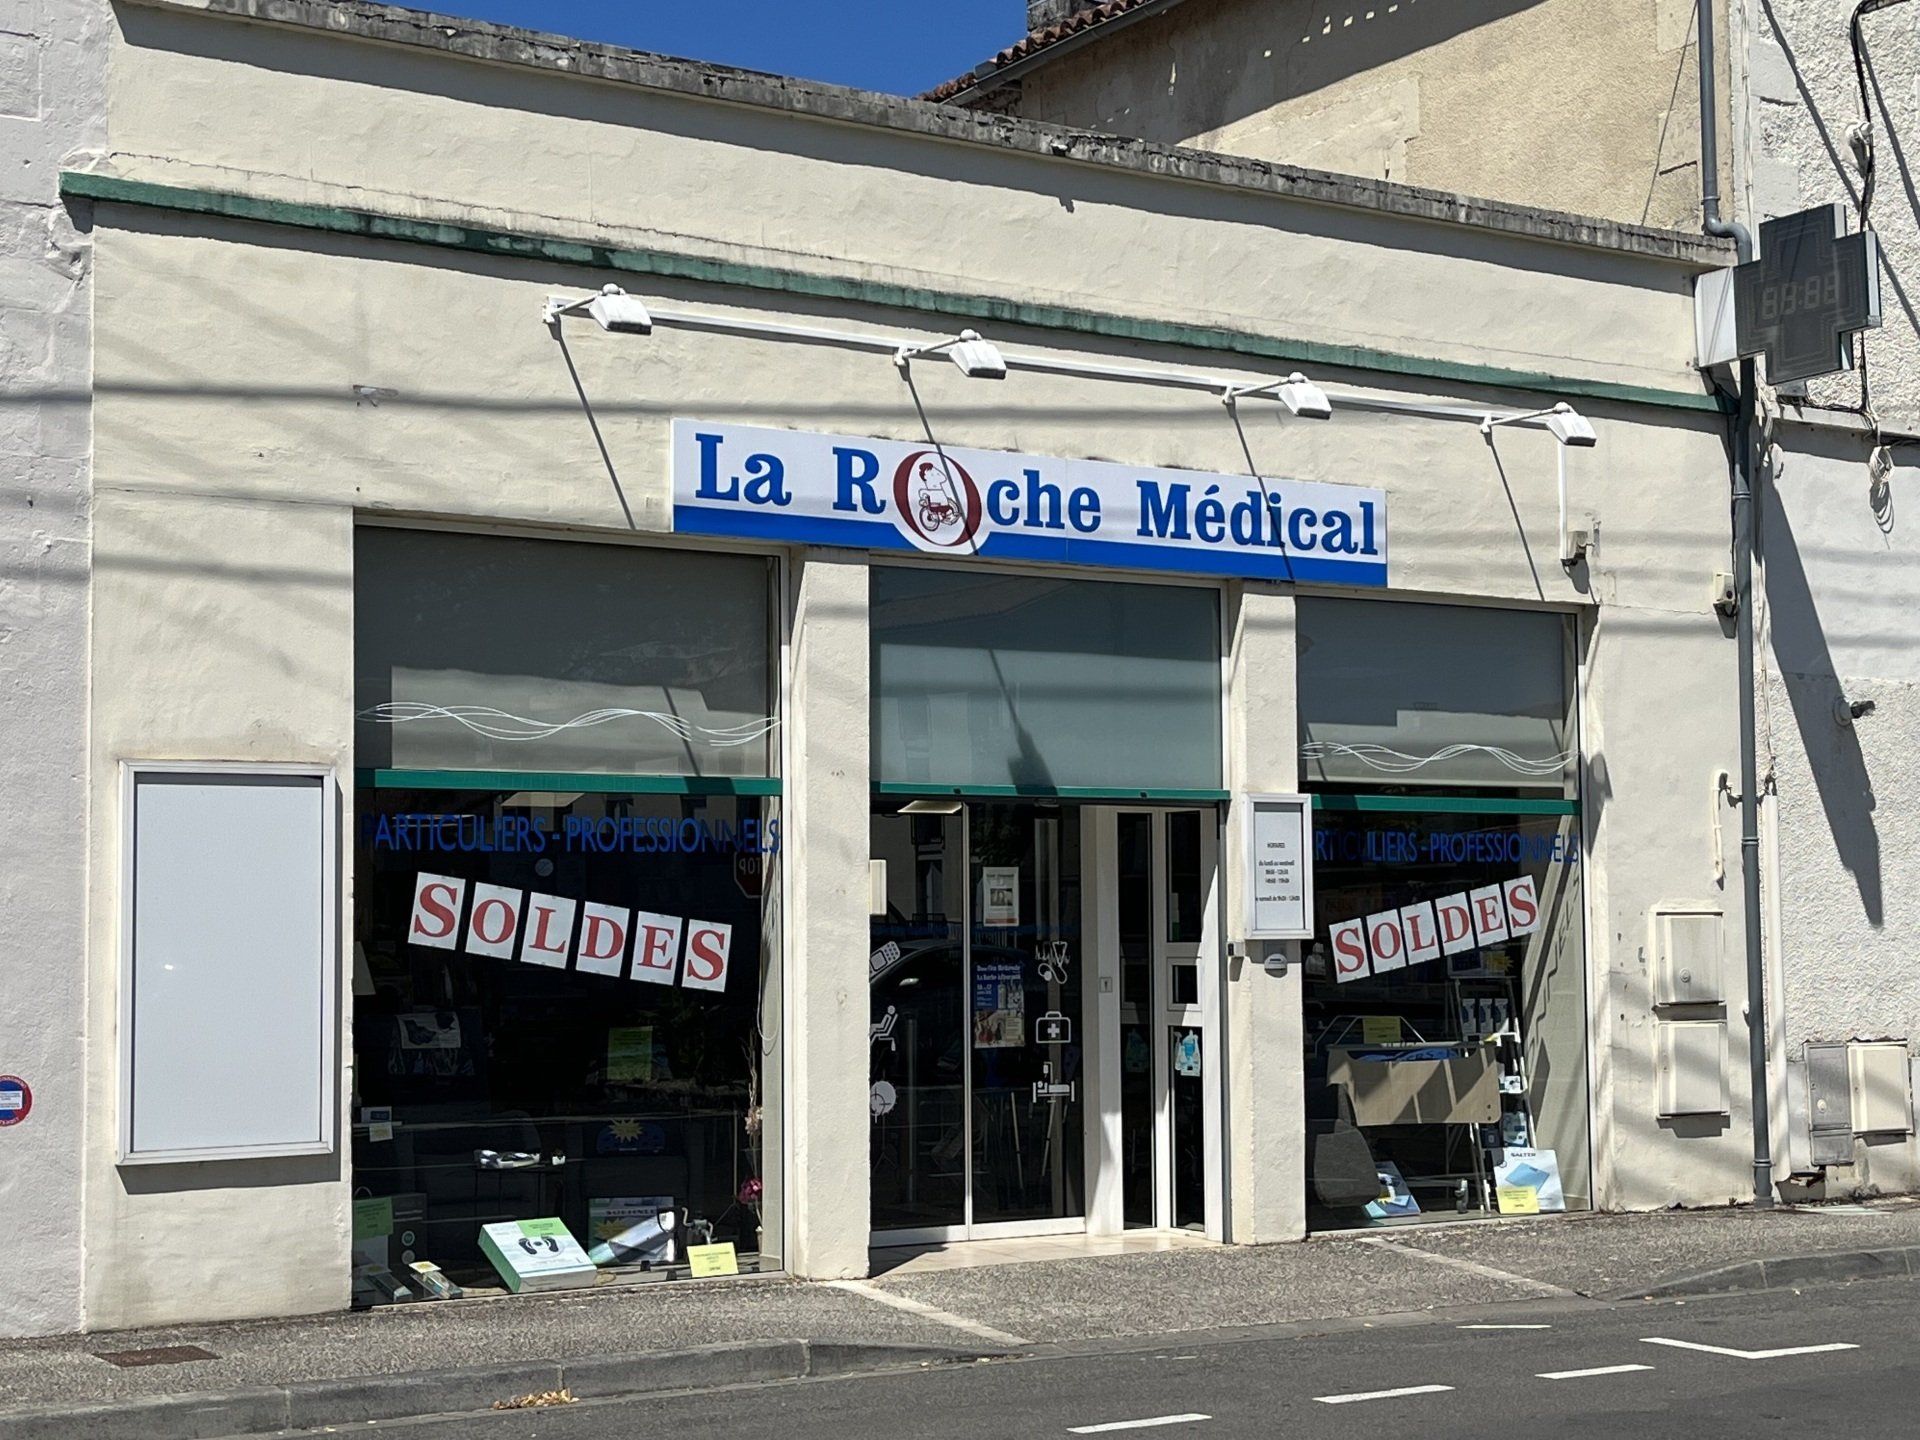 La Roche Médical